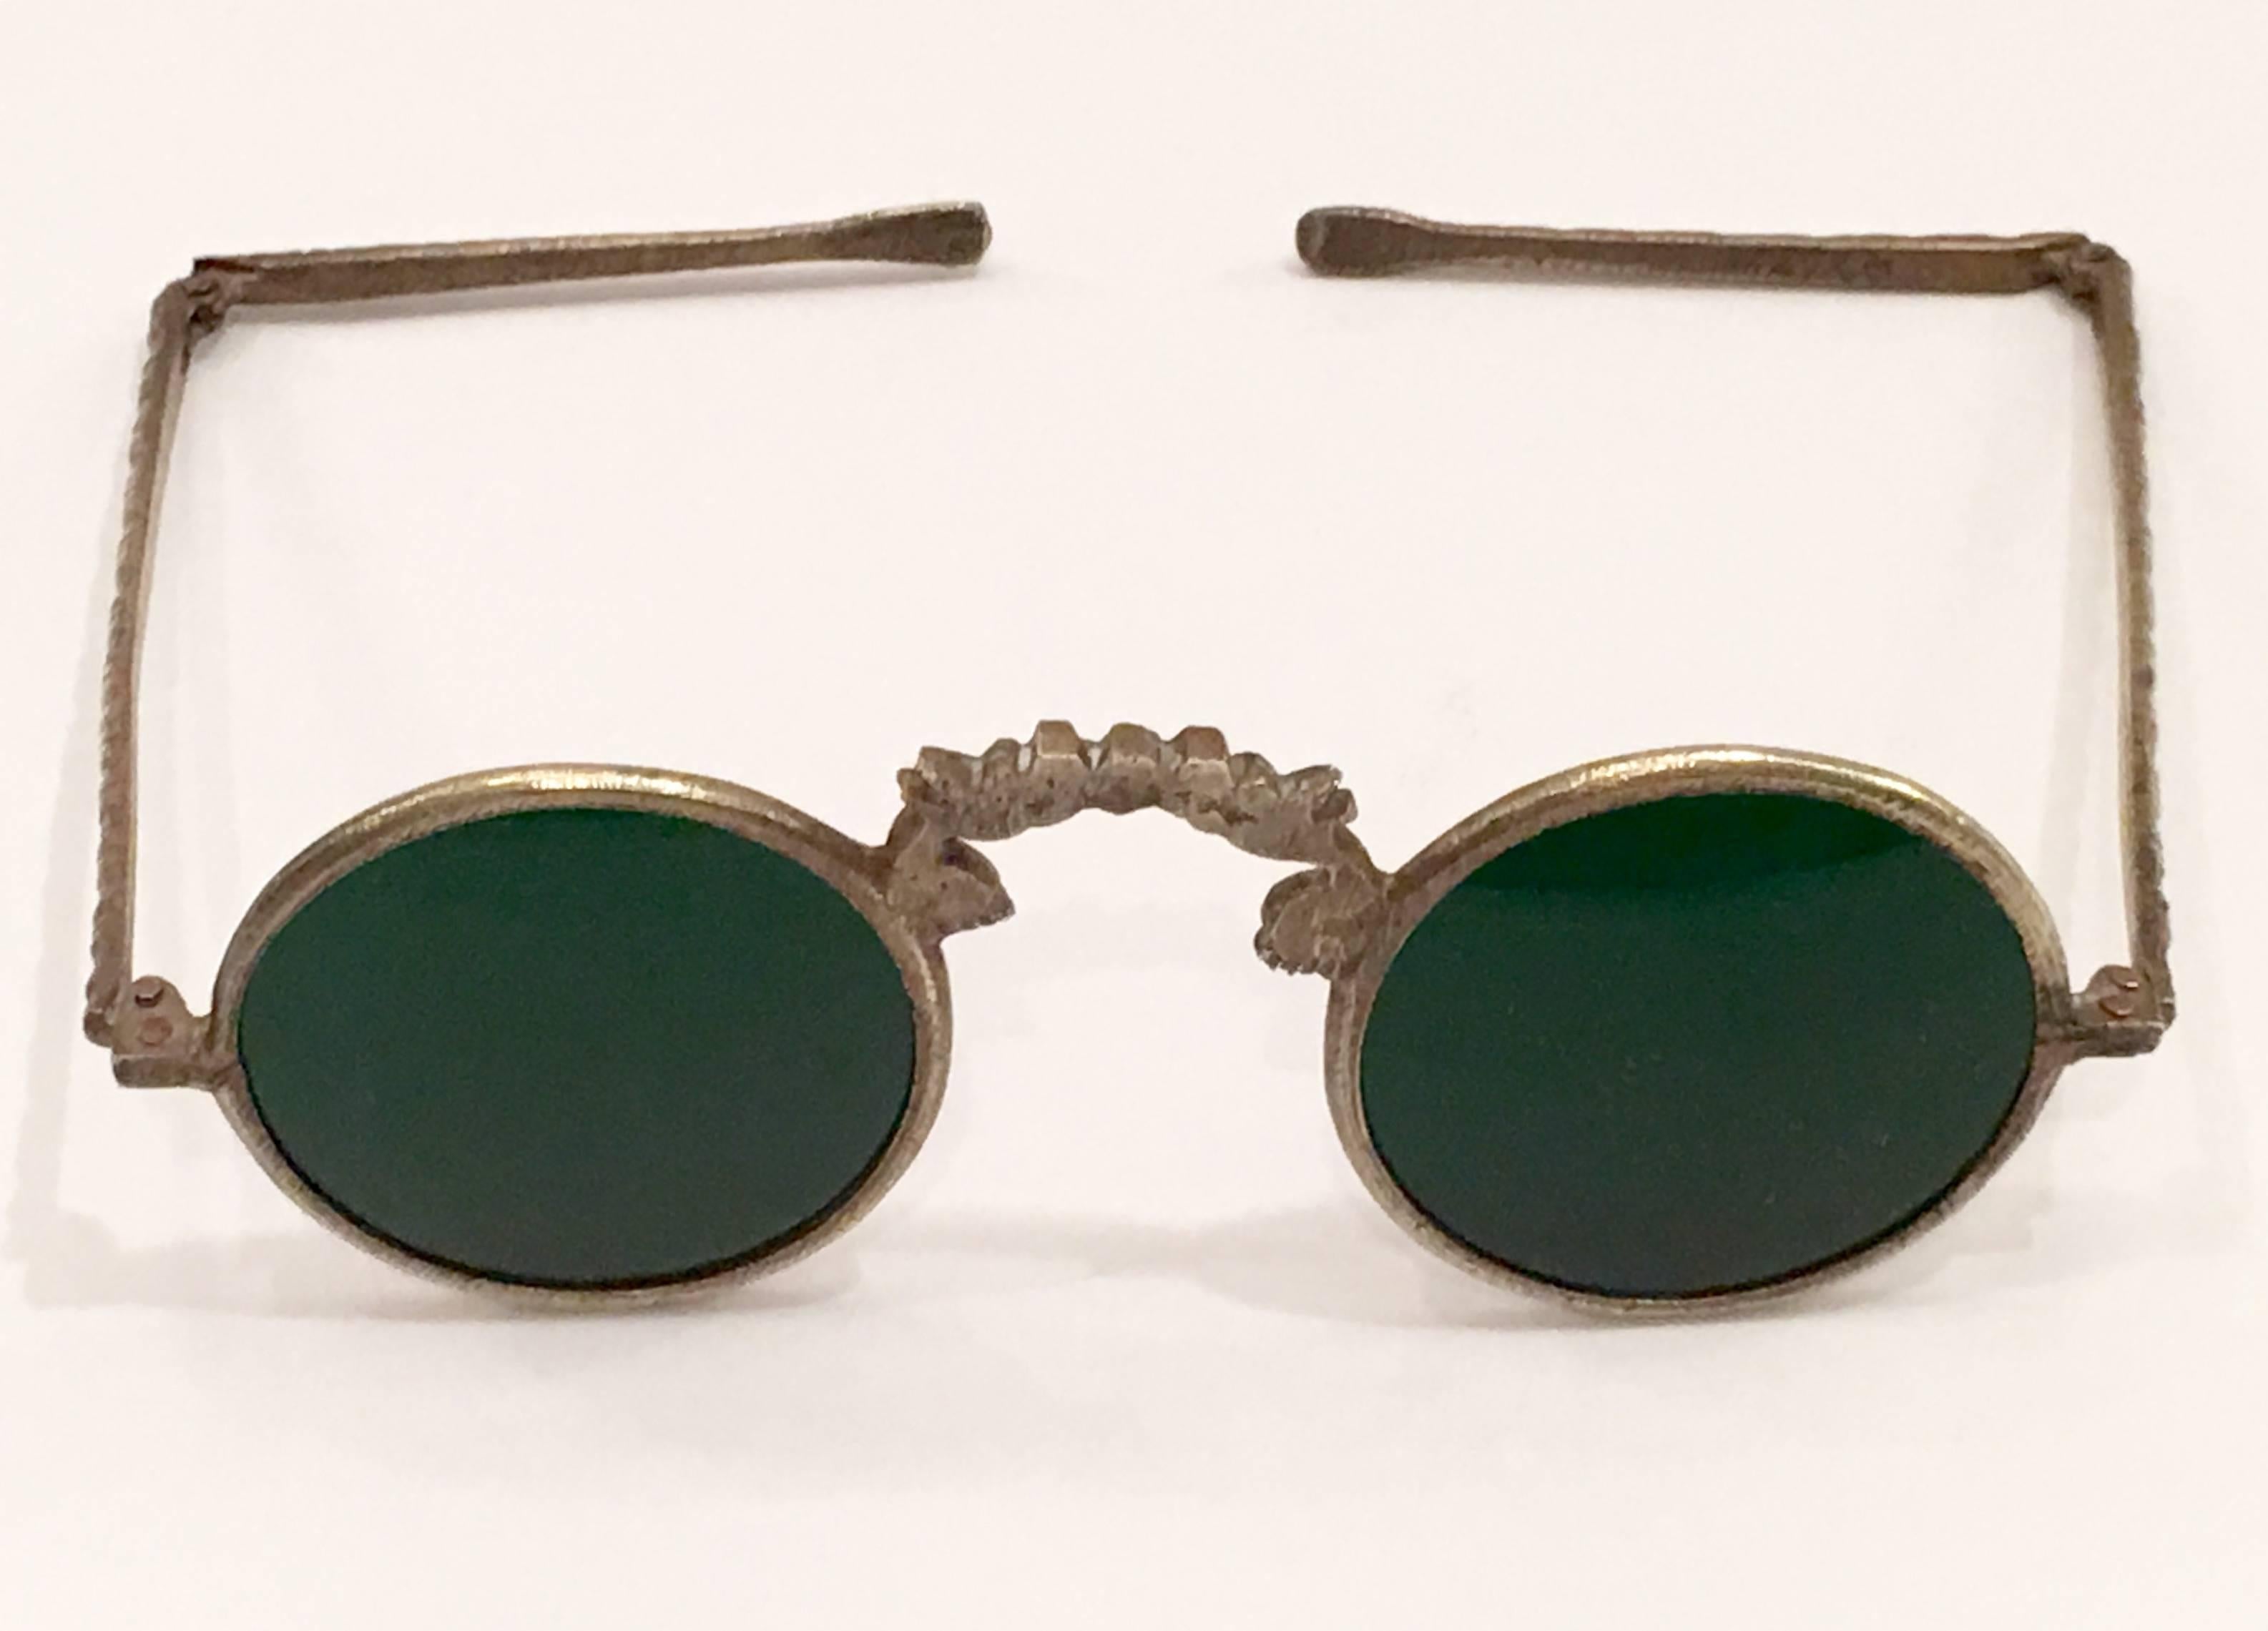 19th century sunglasses